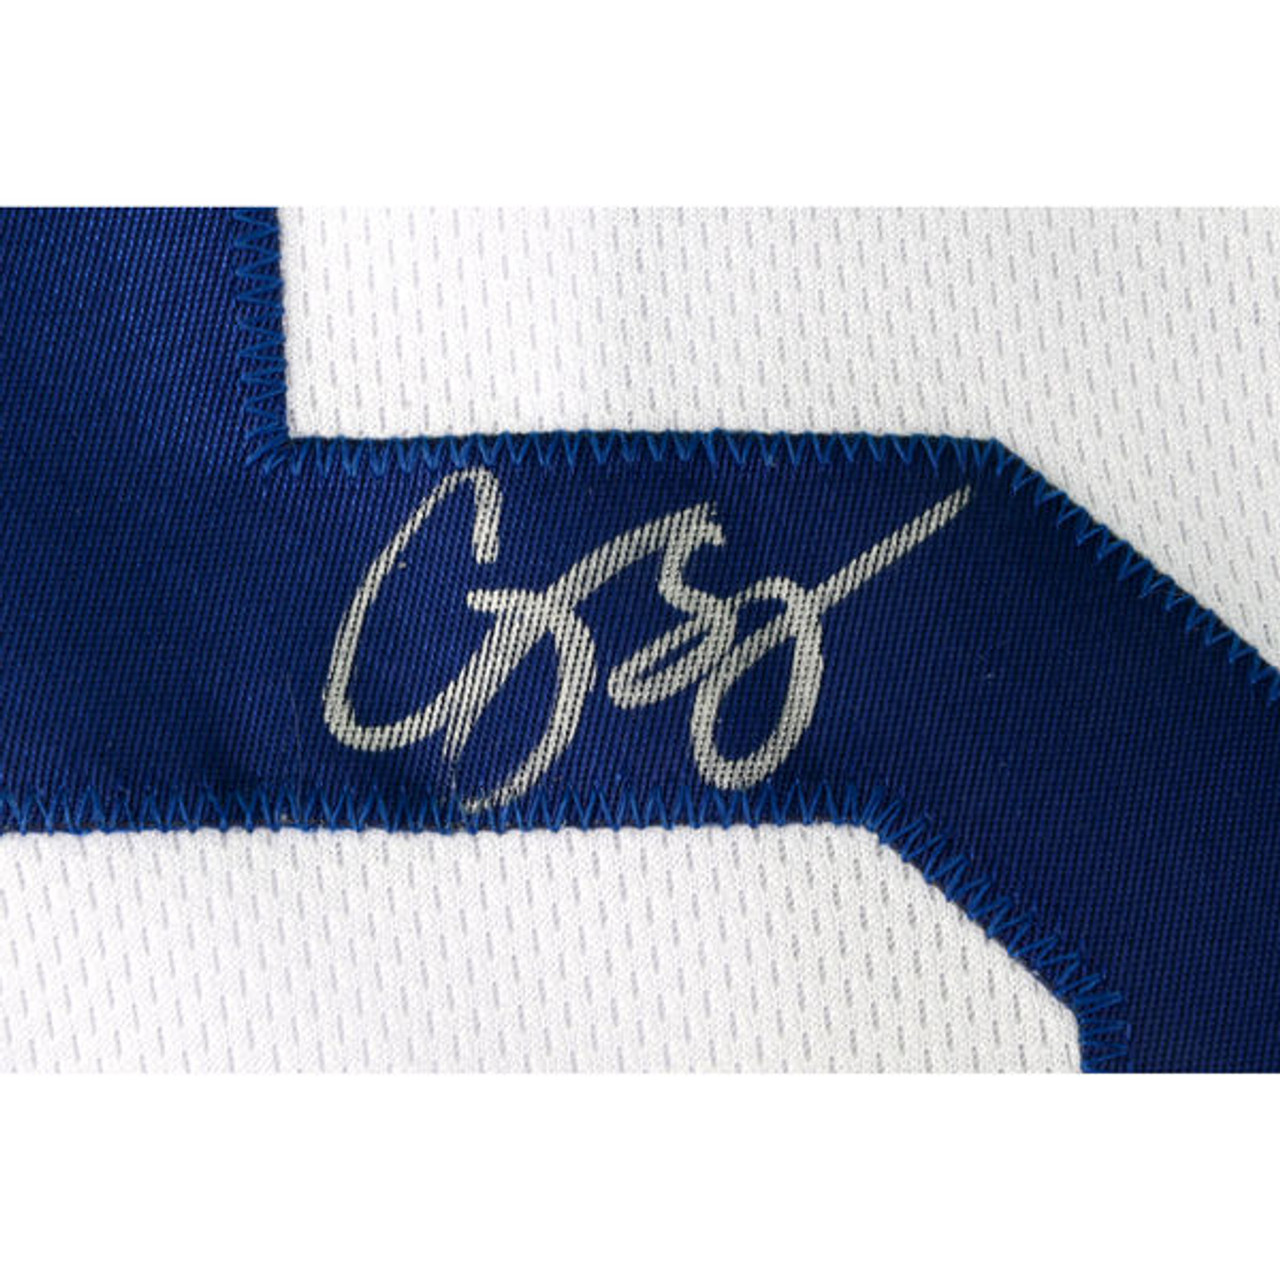 COREY SEAGER Los Angeles Dodgers Autographed White Authentic Jersey FANATICS